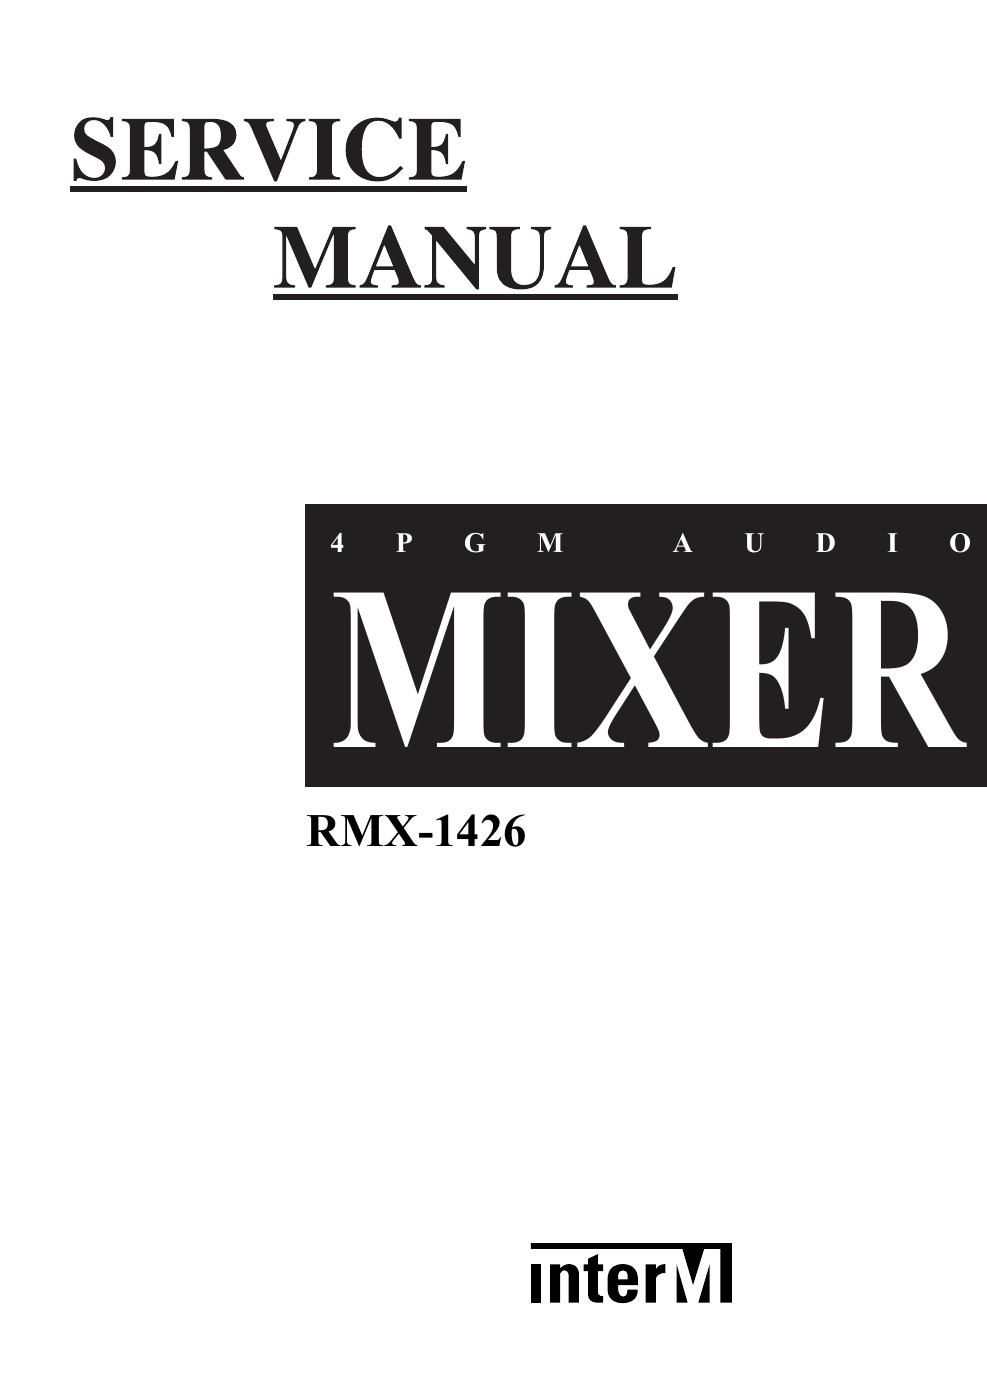 interm rmx 1426 mixer